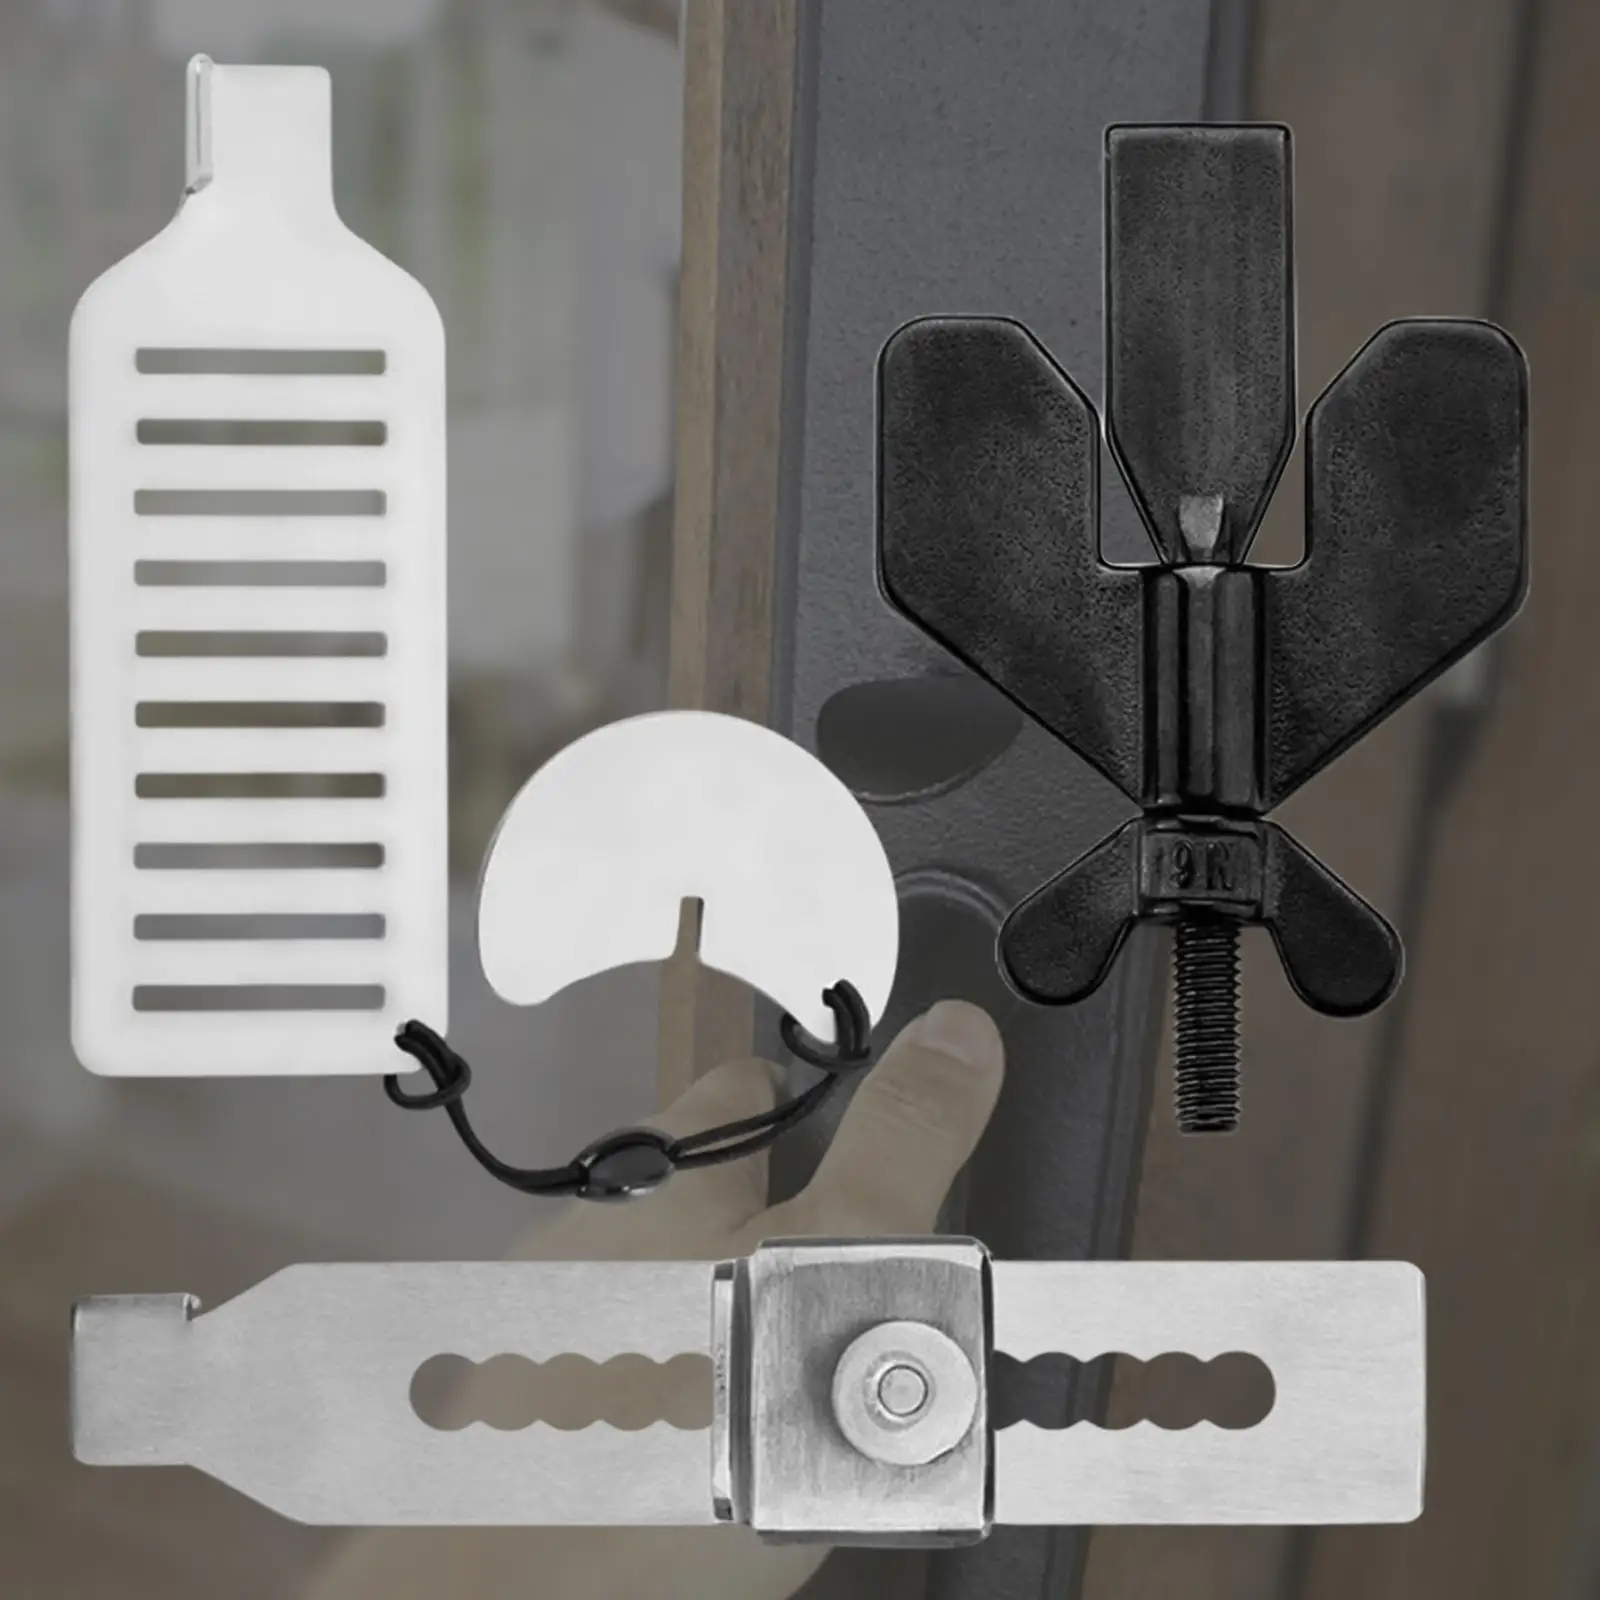 Portable Door Lock, Travel Lockdown Locks Door Stopper for College Hotel Home Apartment Traveling